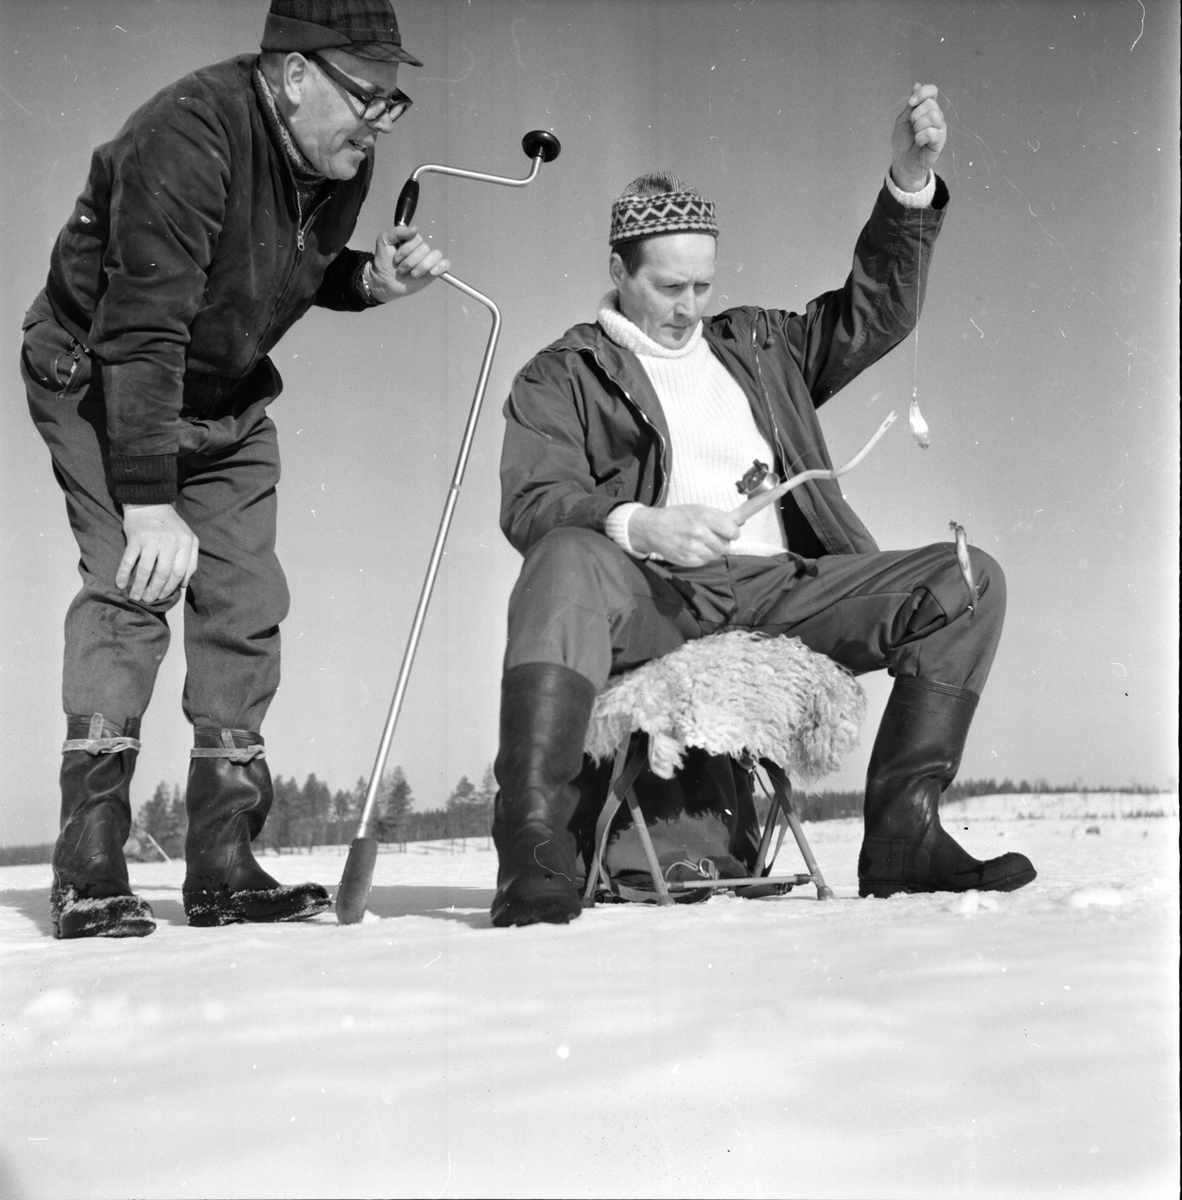 Fiske på Helsen,
P.W.H. Edvard Åkerlund, Lindor Enström,
Söderhamn,
13 Mars 1965
